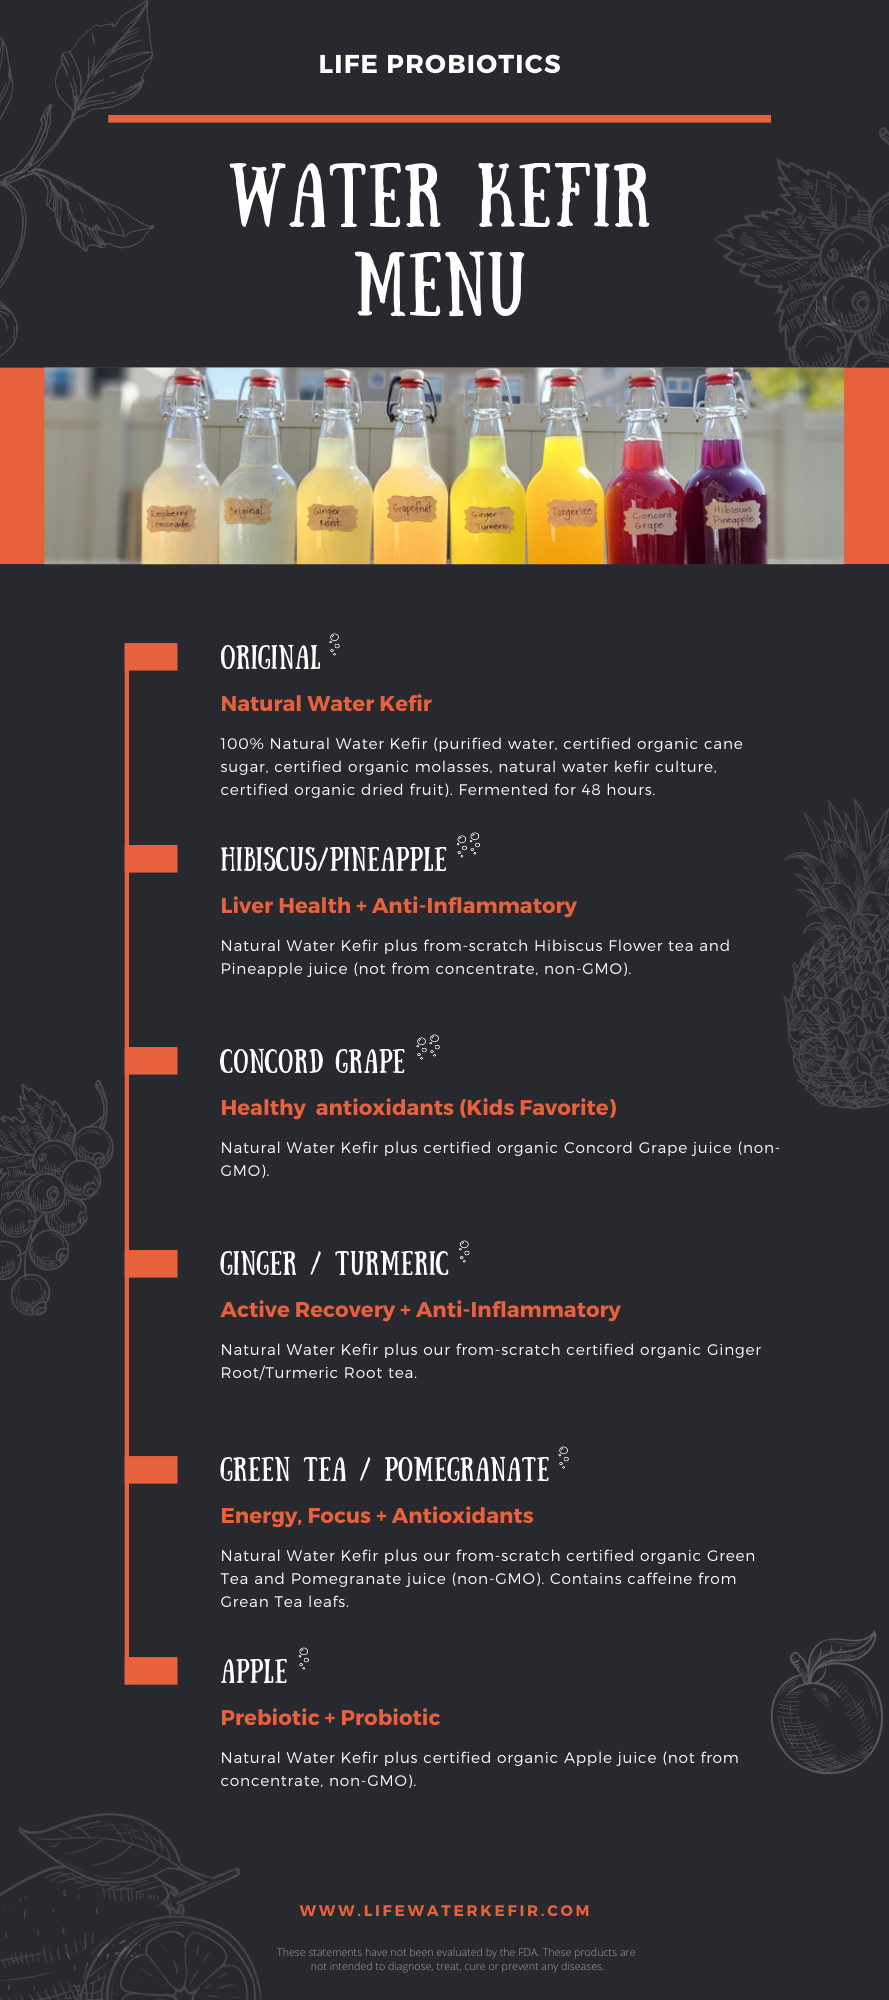 LIFE Probiotics - Menu Page 1 (original, hibiscus pineapple, concord grape, ginger turmeric, green tea pomegranate, apple)